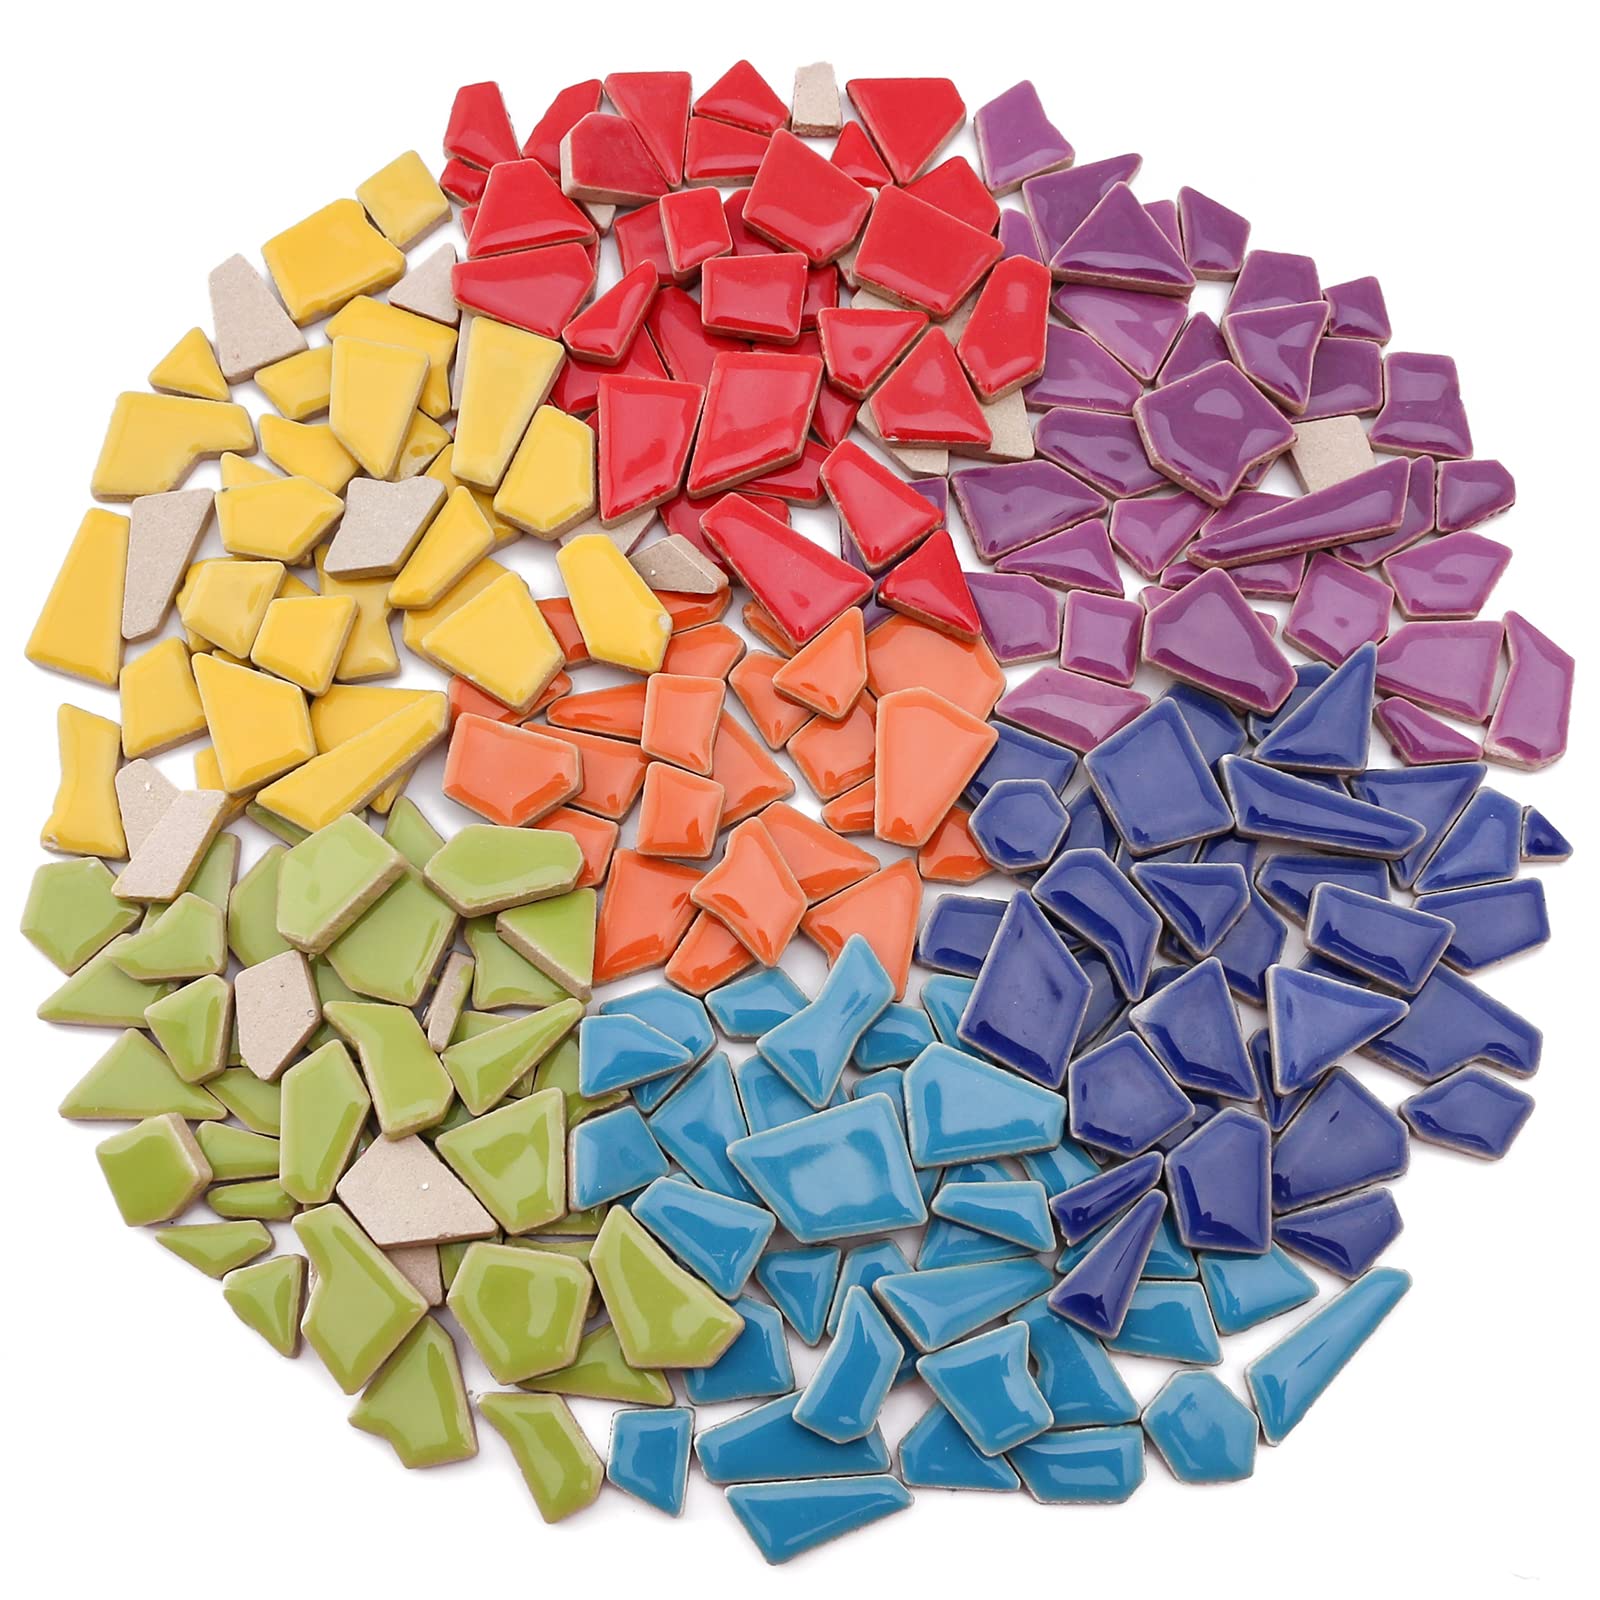 WQ WARMQING Irregular Glass Mosaic Tiles for Crafts Bulk, Broken